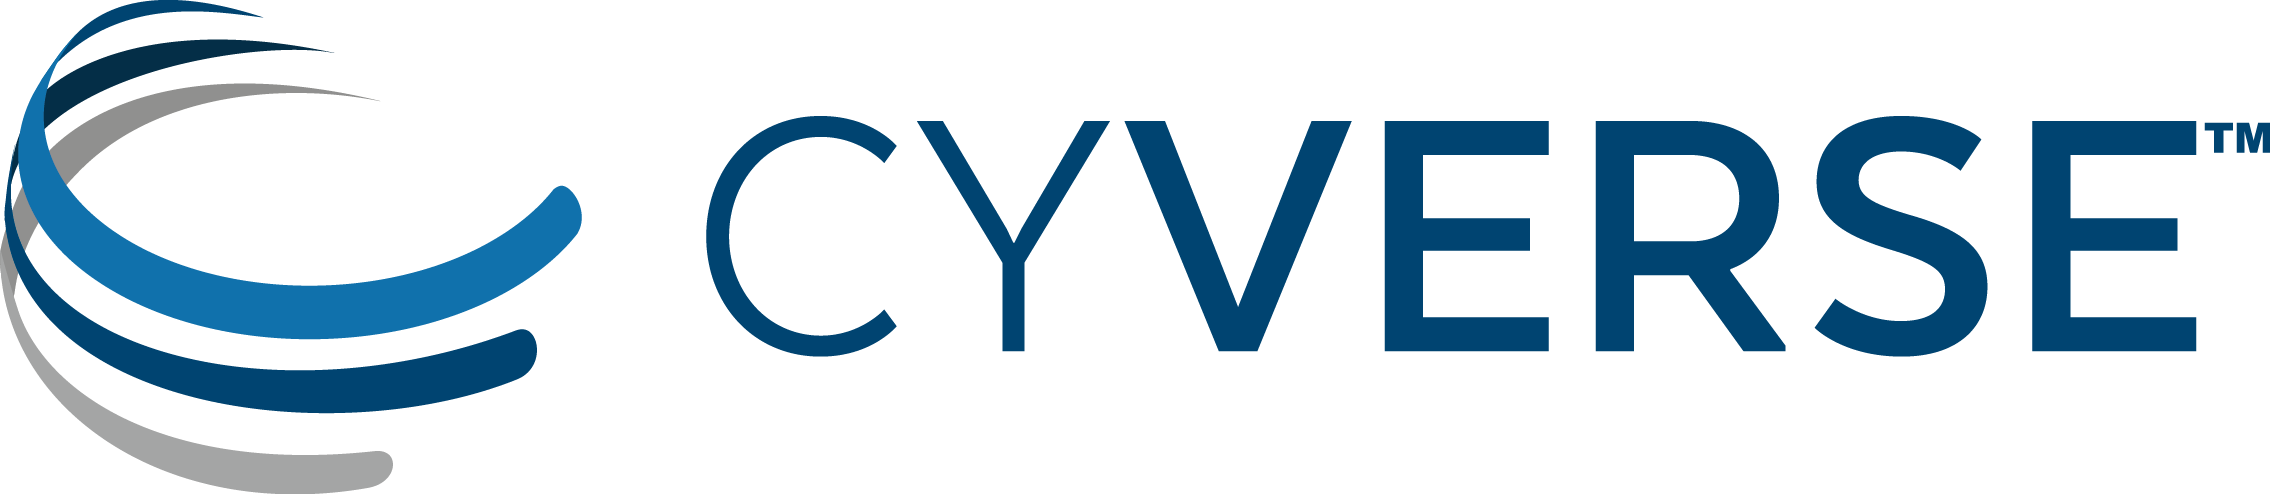 CyVerse_logo